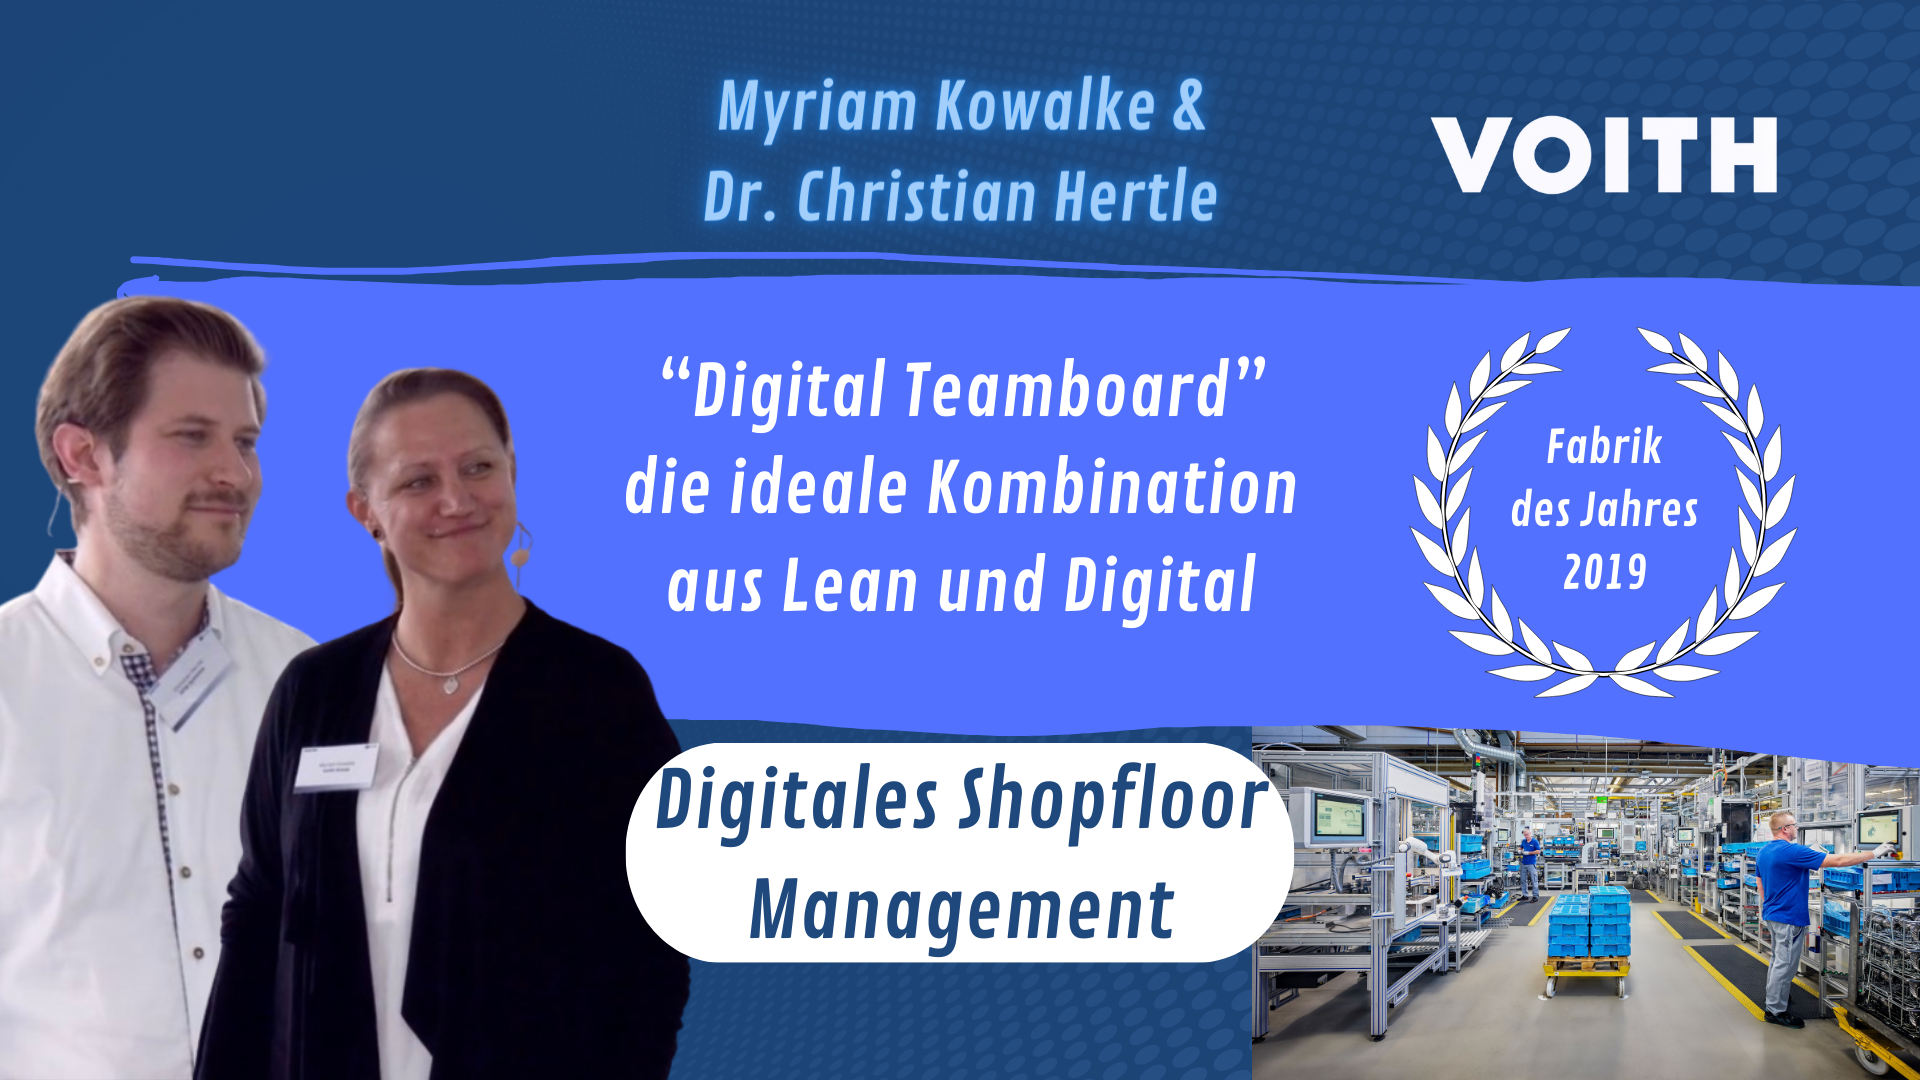 DIGITAL - Digitales Shopfloor Management mit Myriam Kowalke & Dr. Christian Hertle